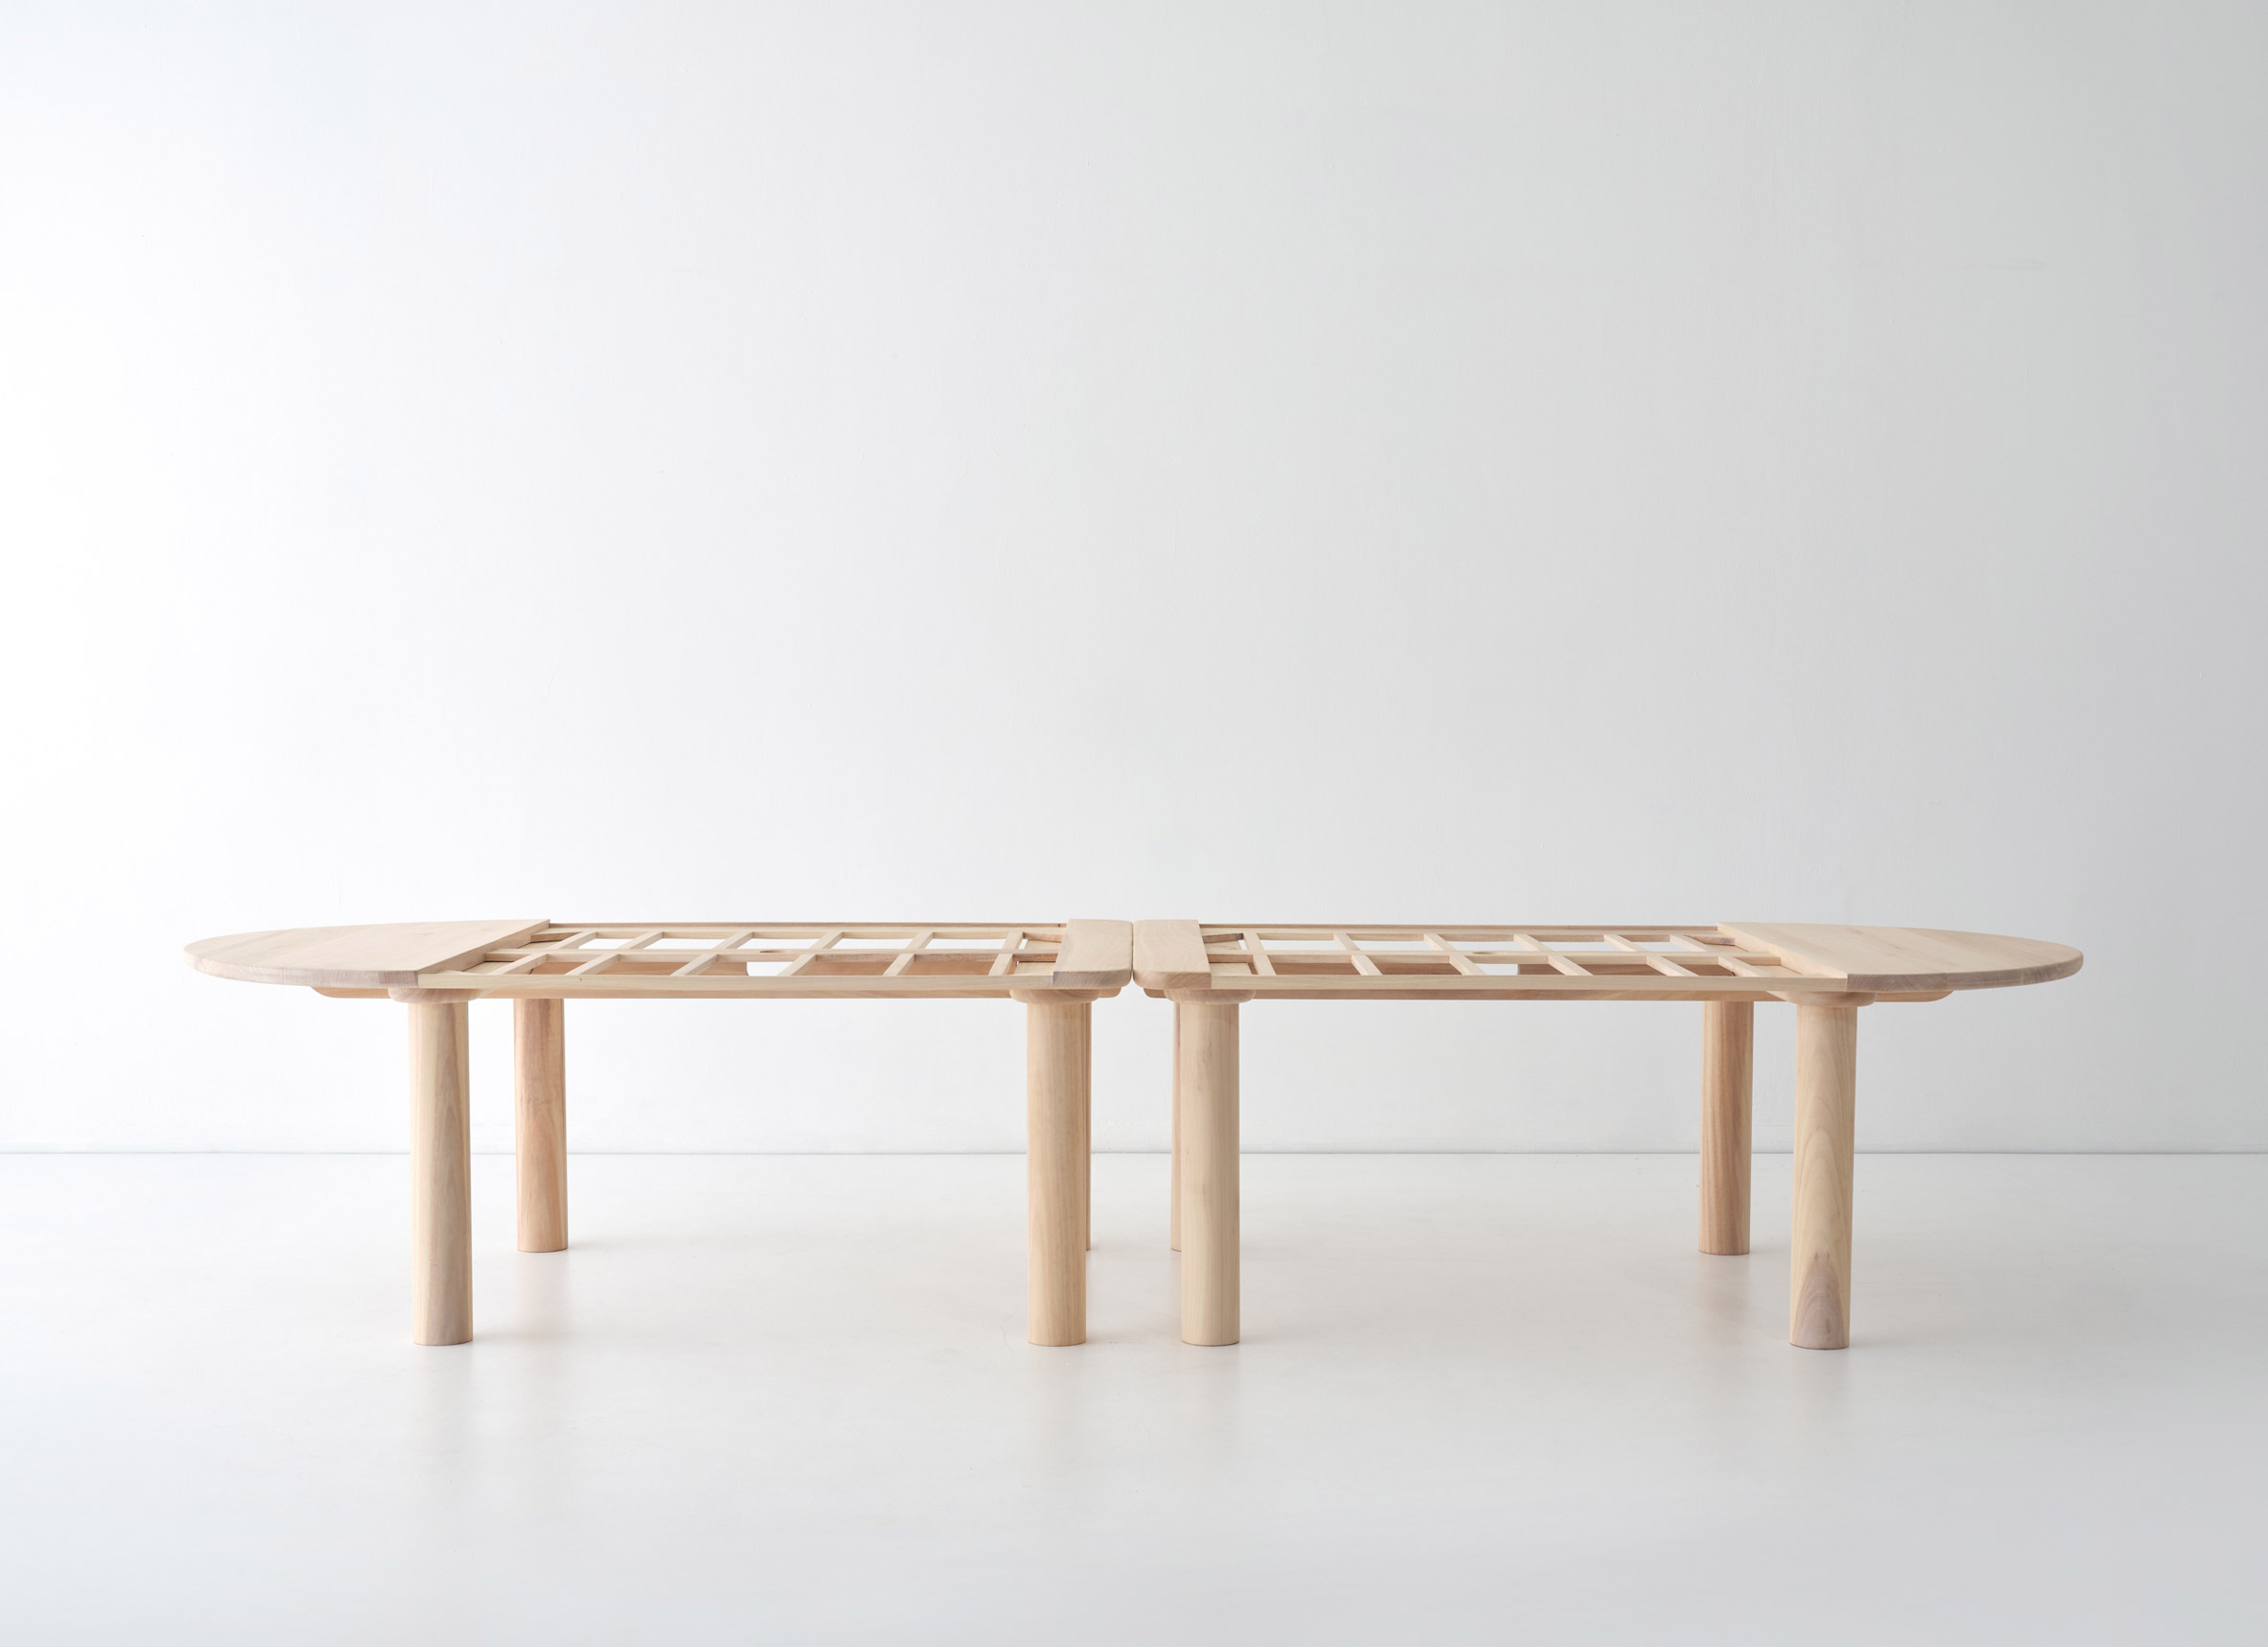 Eucalyptus timber table frame for Work Series II